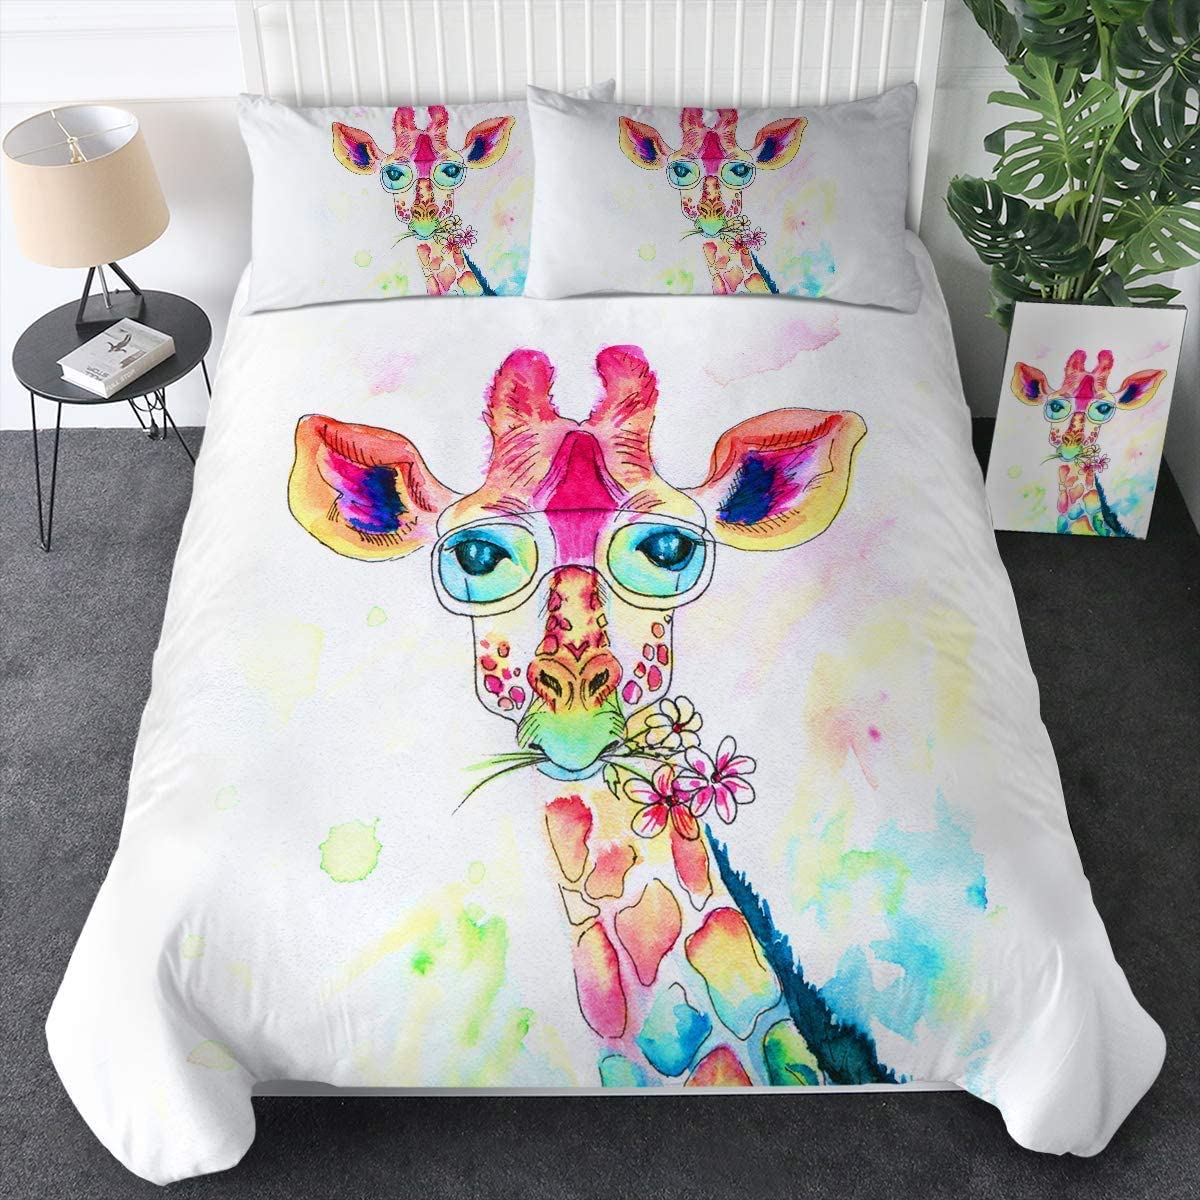 Extra Soft Bedding for the Giraffe Lover